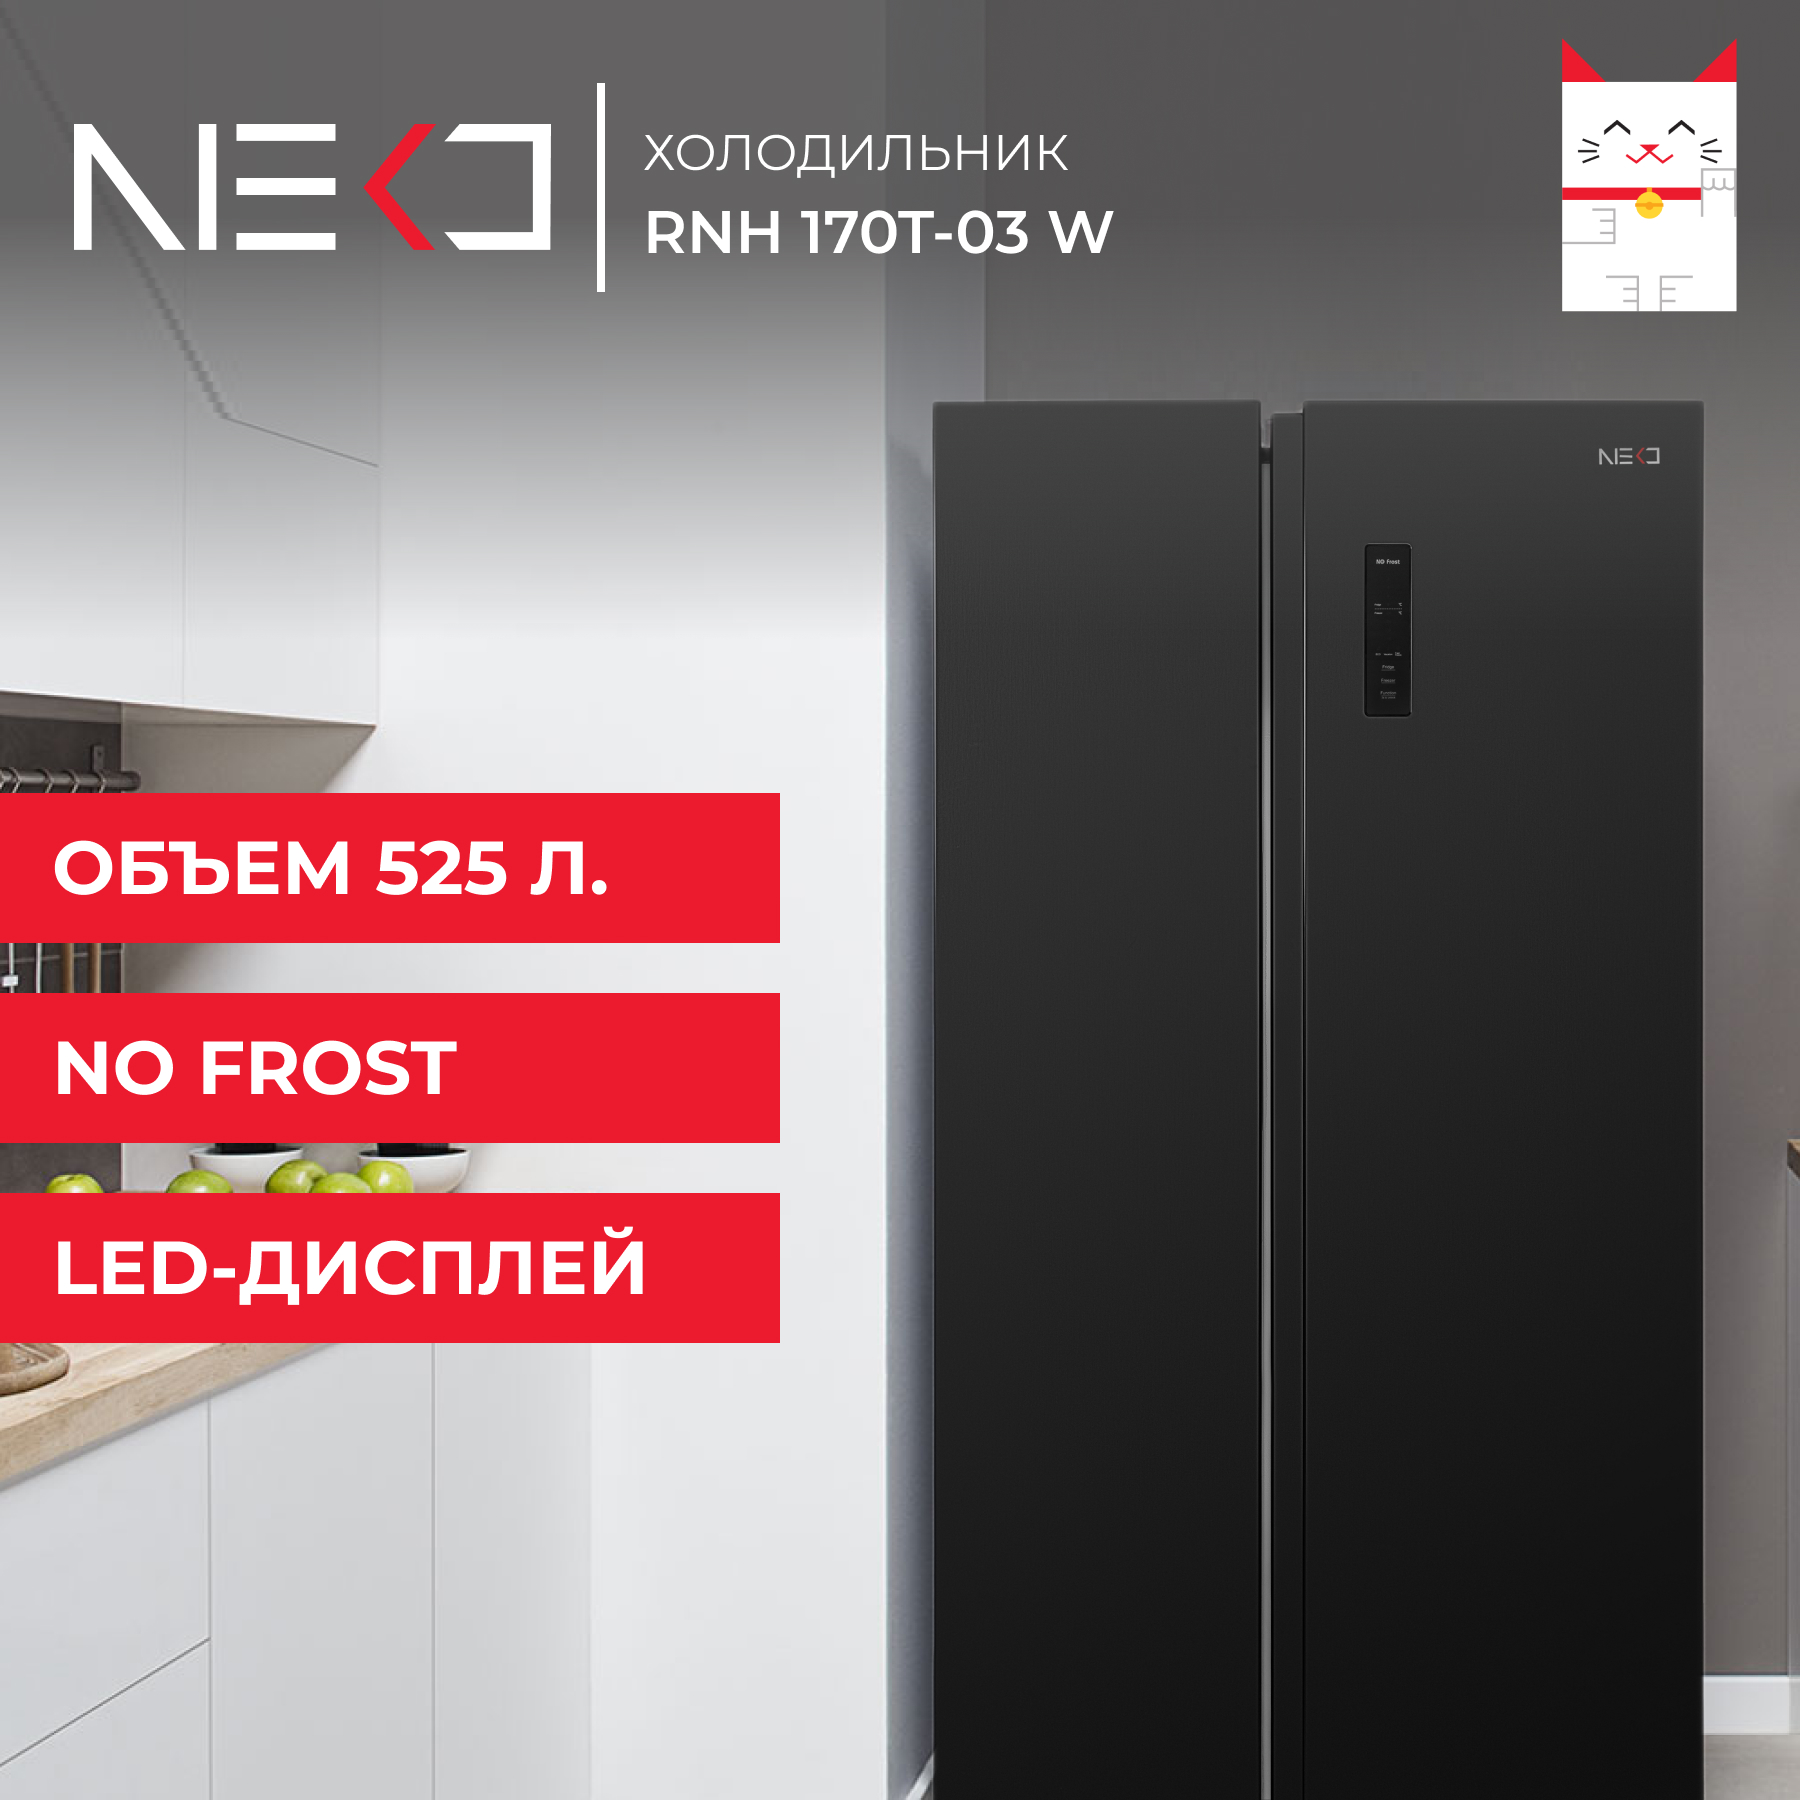 Холодильник Neko RNH 170T-03 W черный холодильник side by side scandilux sbs 711 ez 12 x fn 711 e12 x r 711 ez 12 x